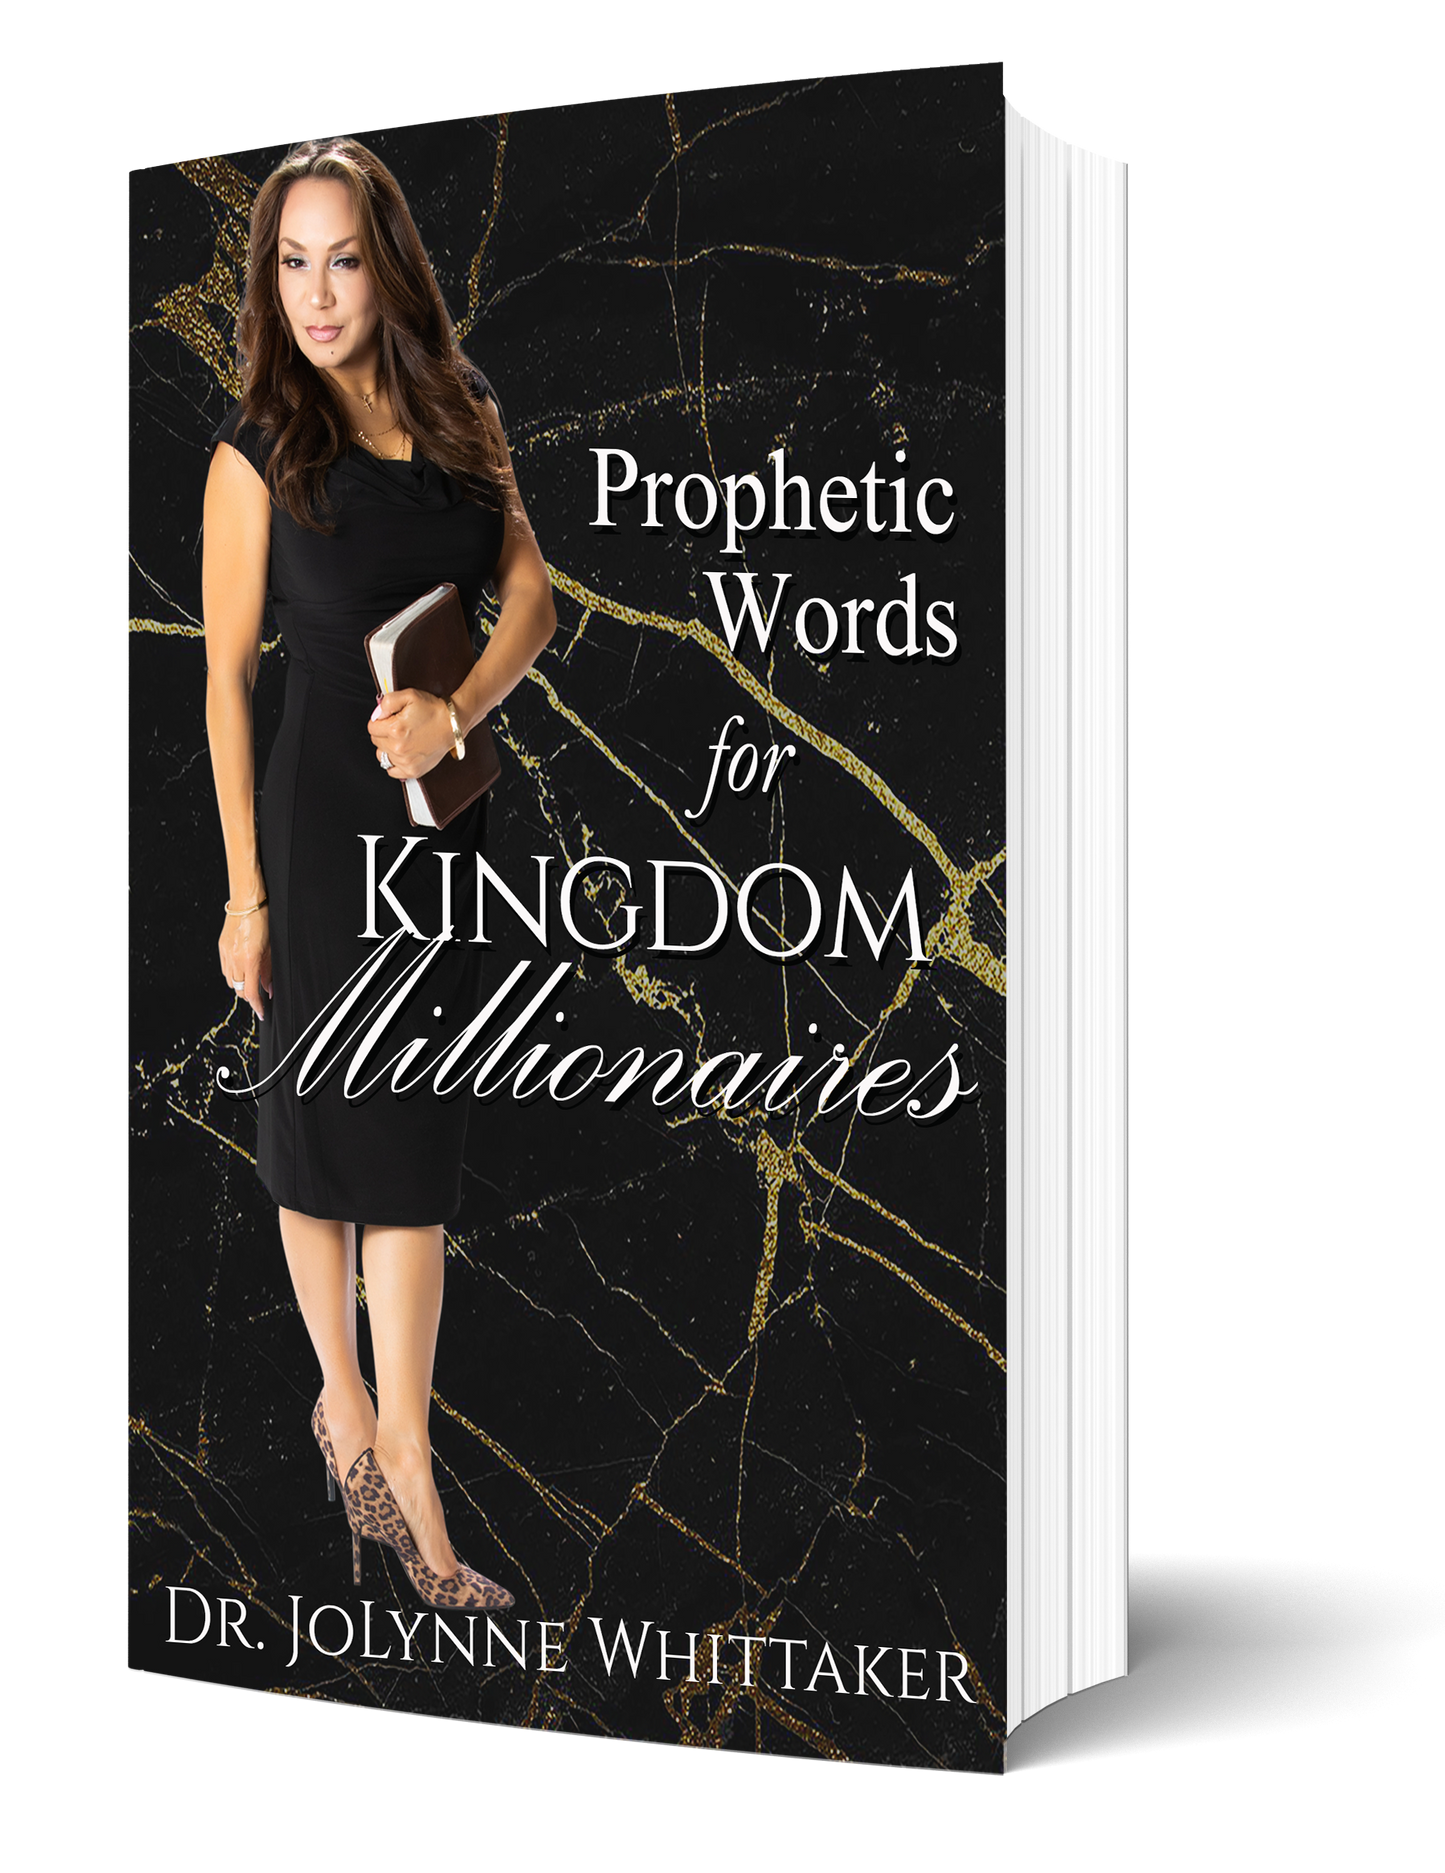 Prophetic Words for Kingdom Millionaires